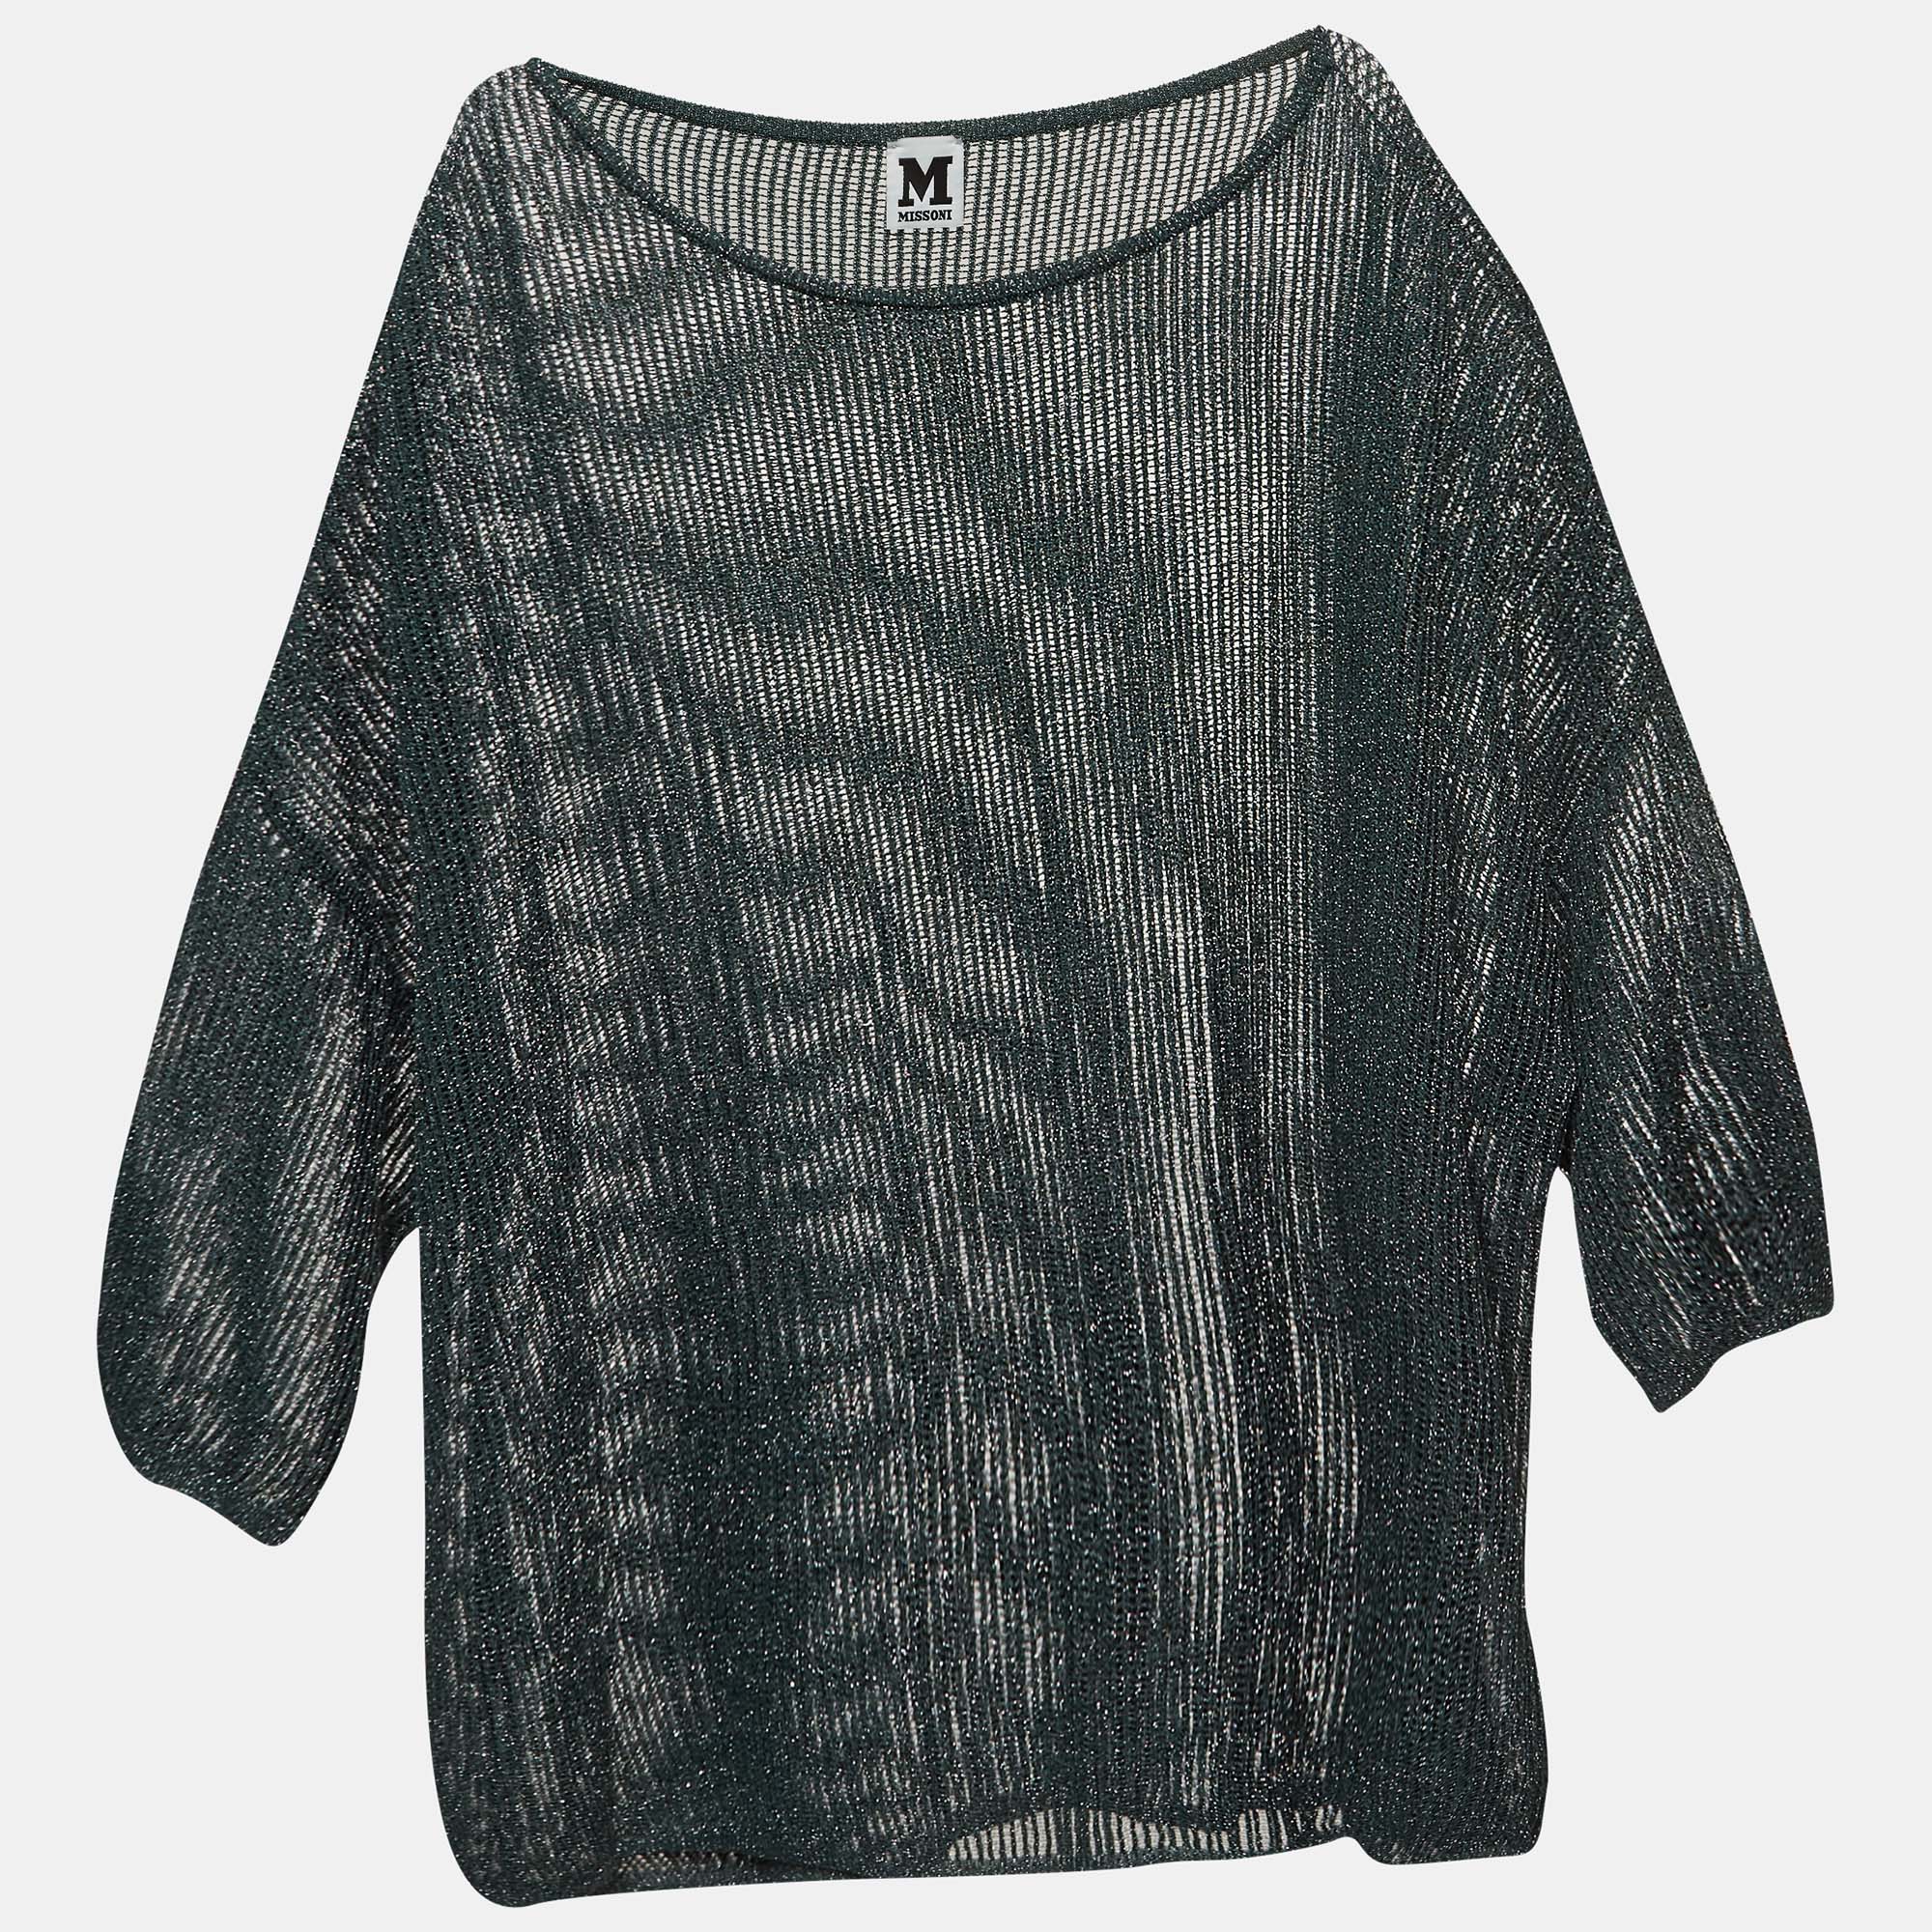 M missoni lurex patterned knit oversized top s